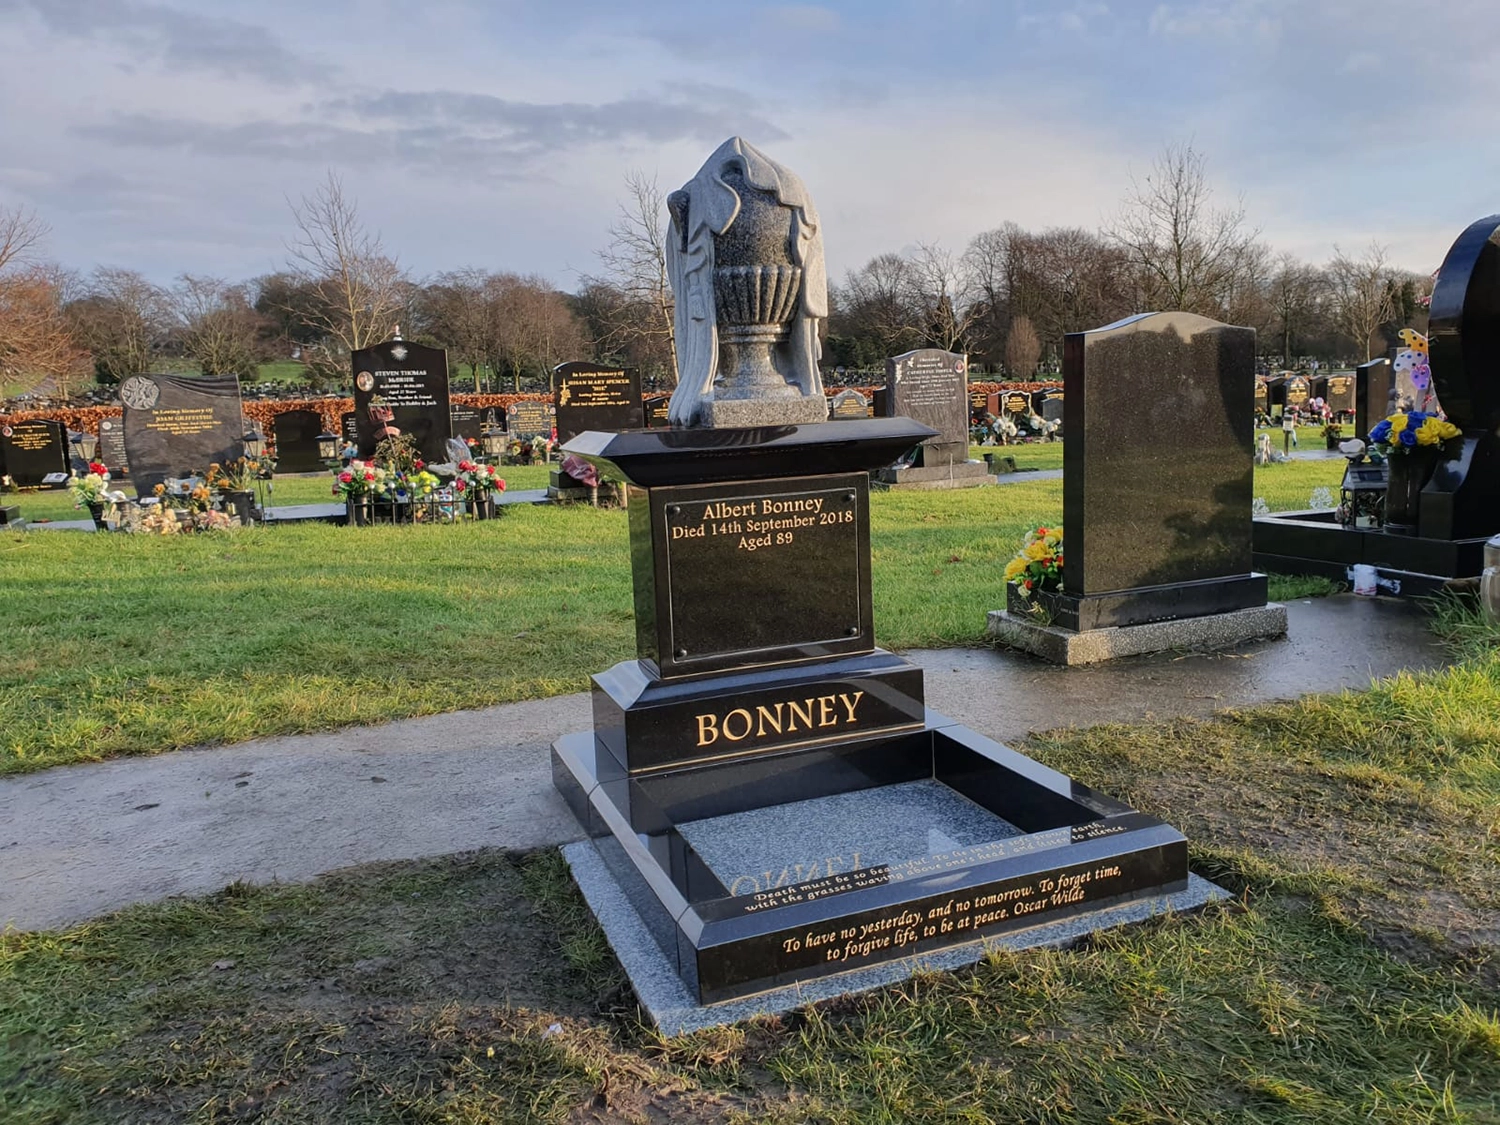 Headstone, Gravestones, and Memorials in Yorkshire by Northern Headstones